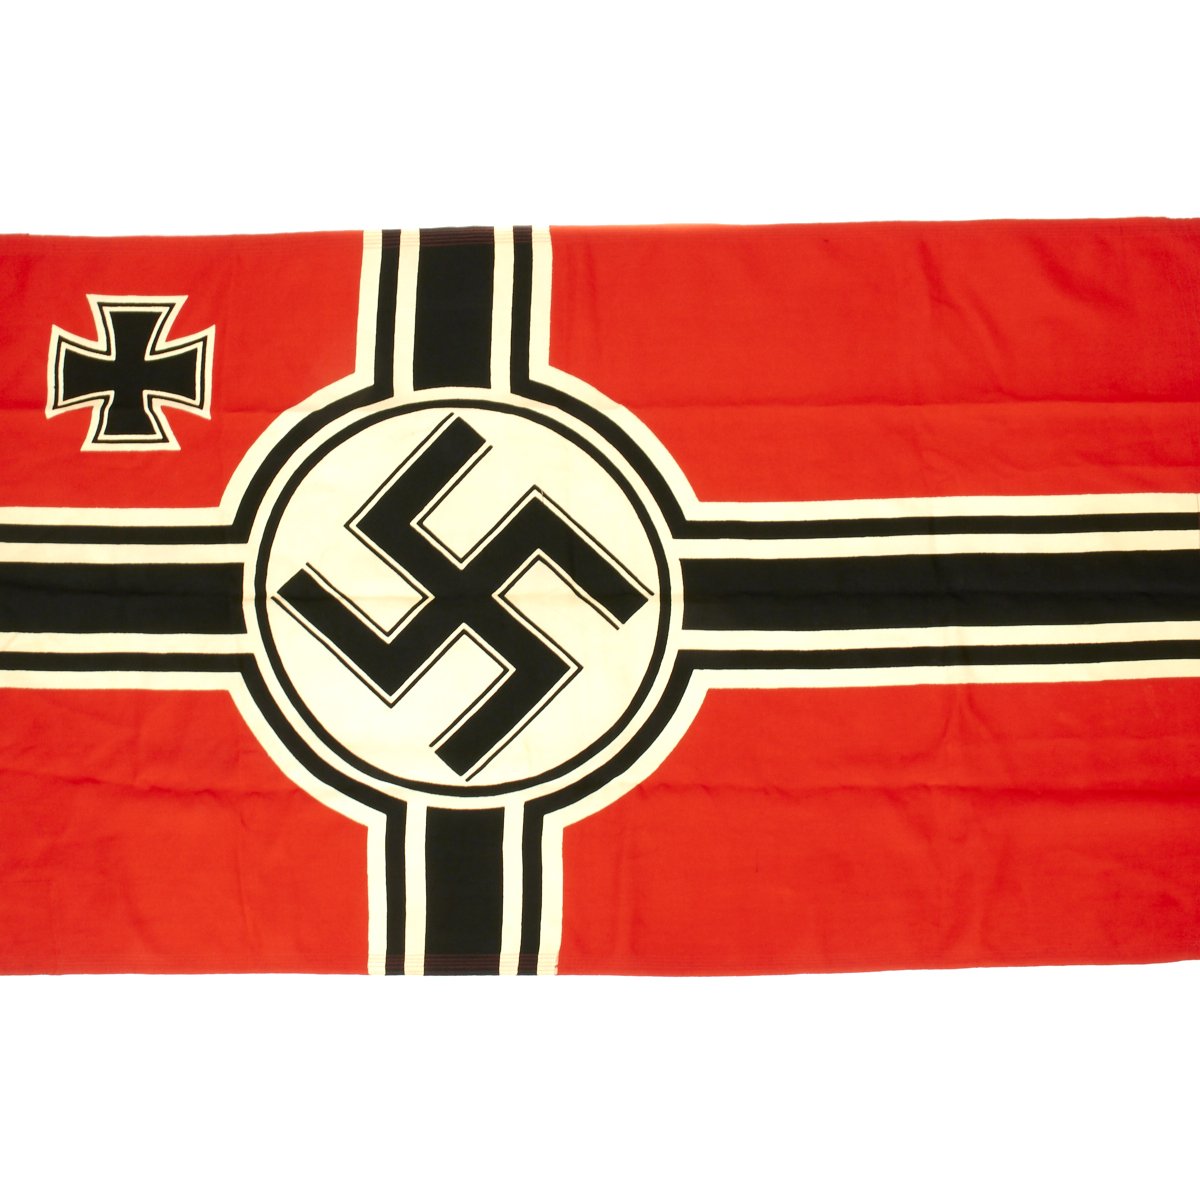 флаги германии в 1945